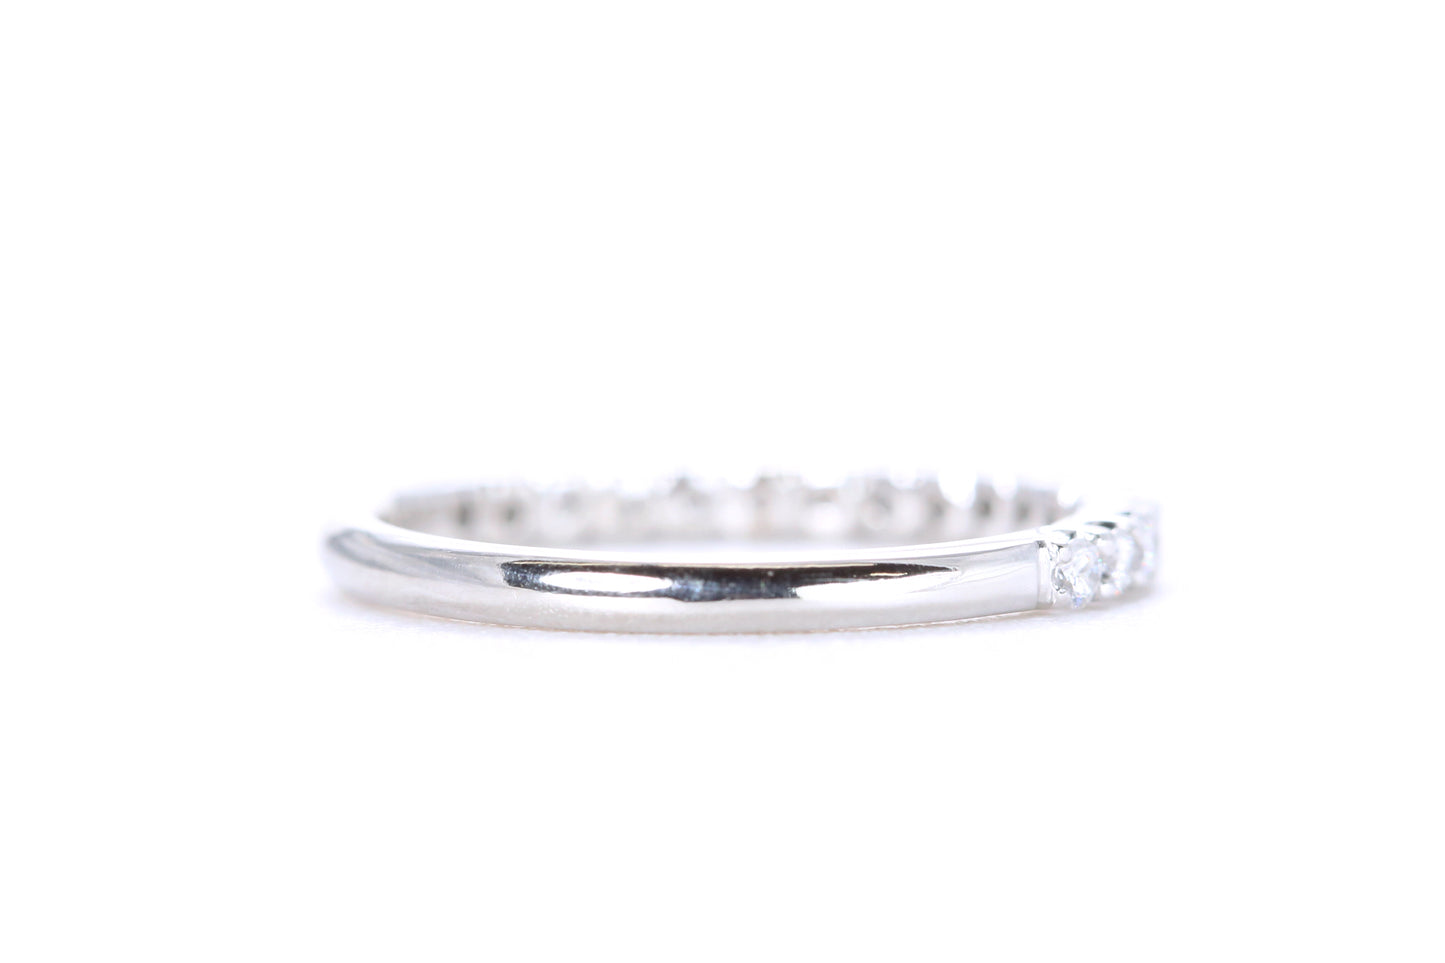 Pavé Diamond Ring 1/3 Carat in Platinum